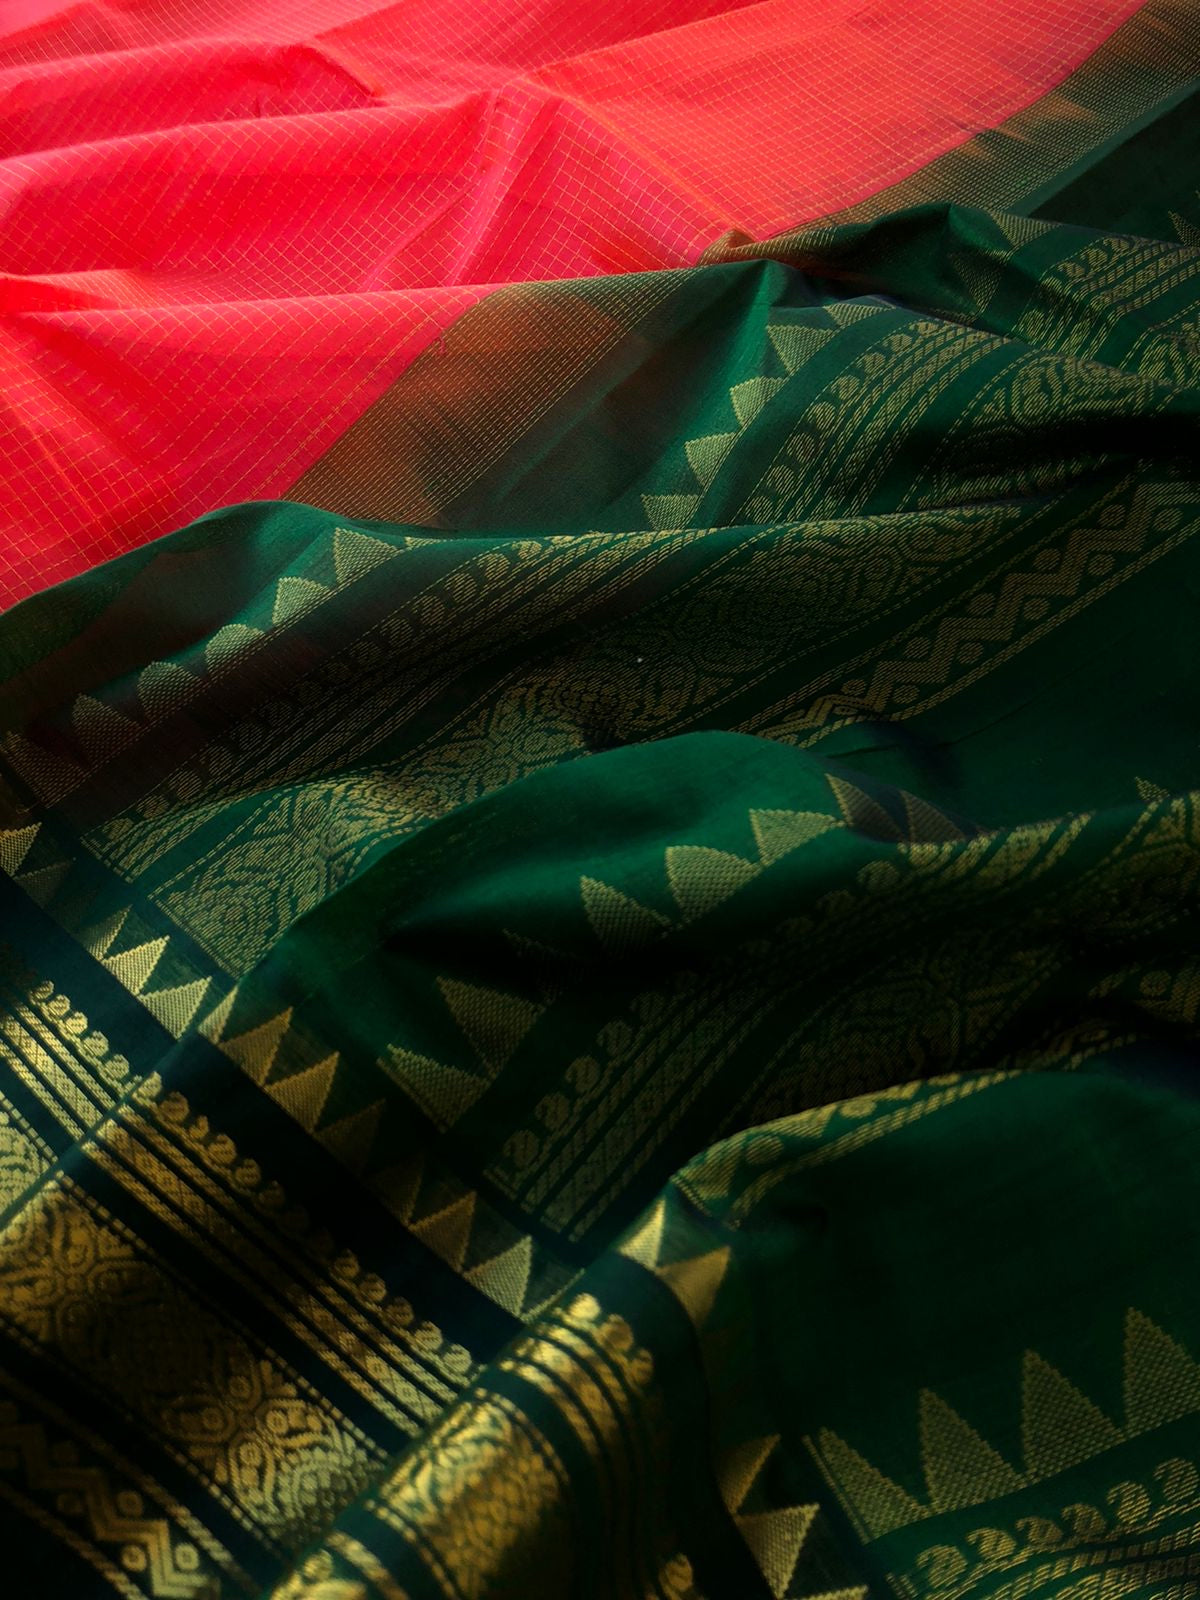 Podi kattam ( tiny chexs ) on Korvai Silk Cotton - Kanagambaram orange pink and Meenakshi green zari kattam